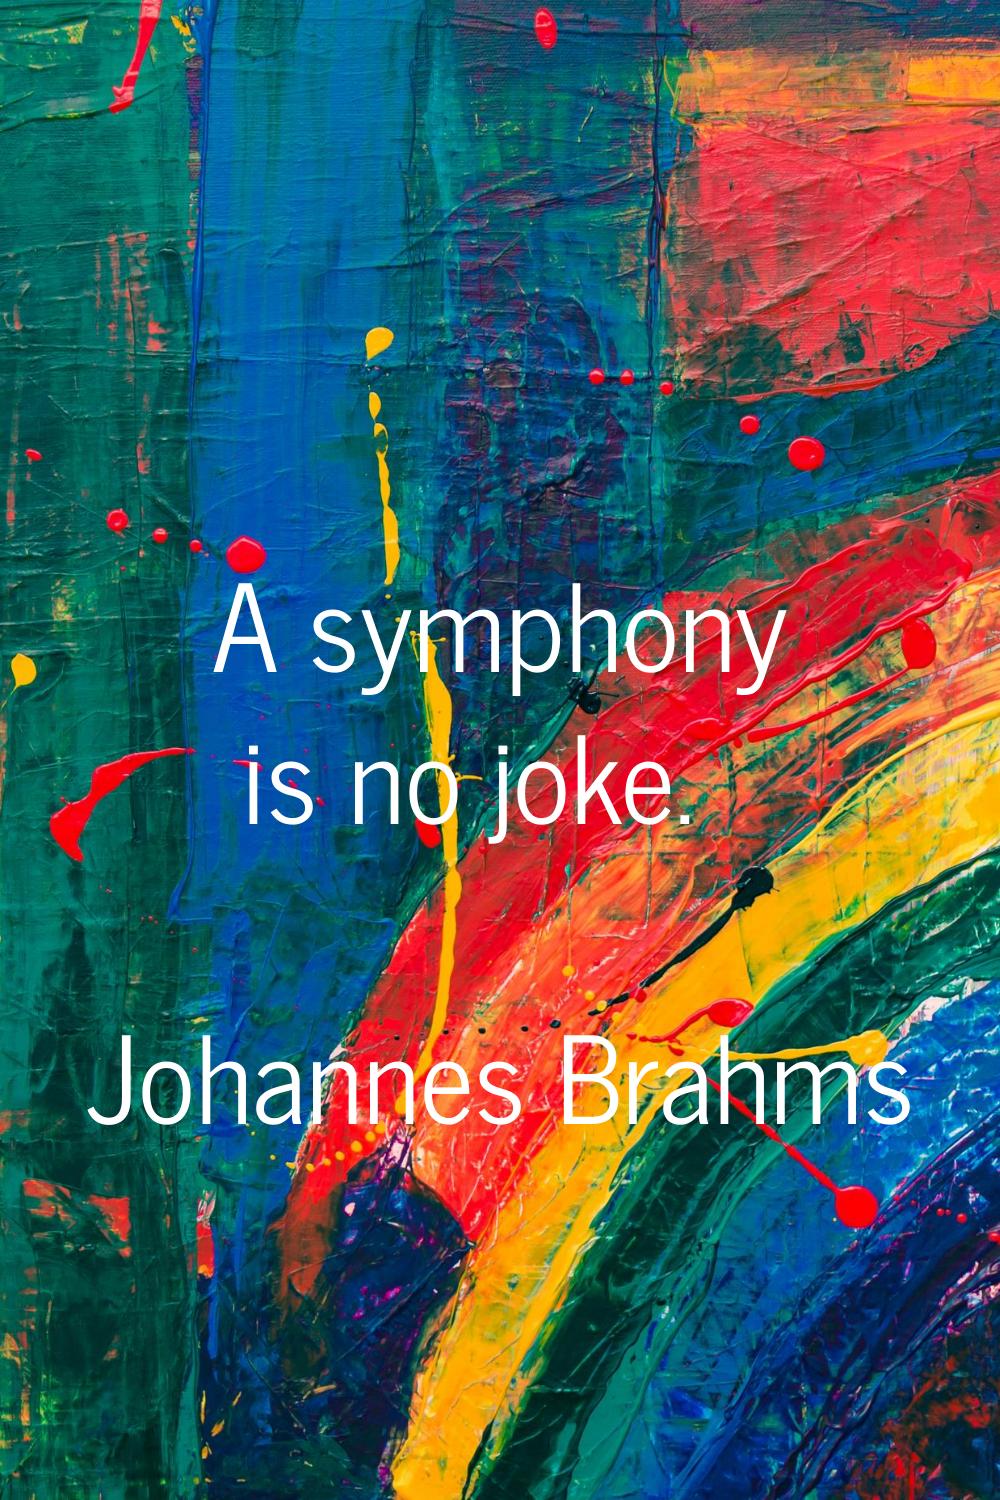 A symphony is no joke.